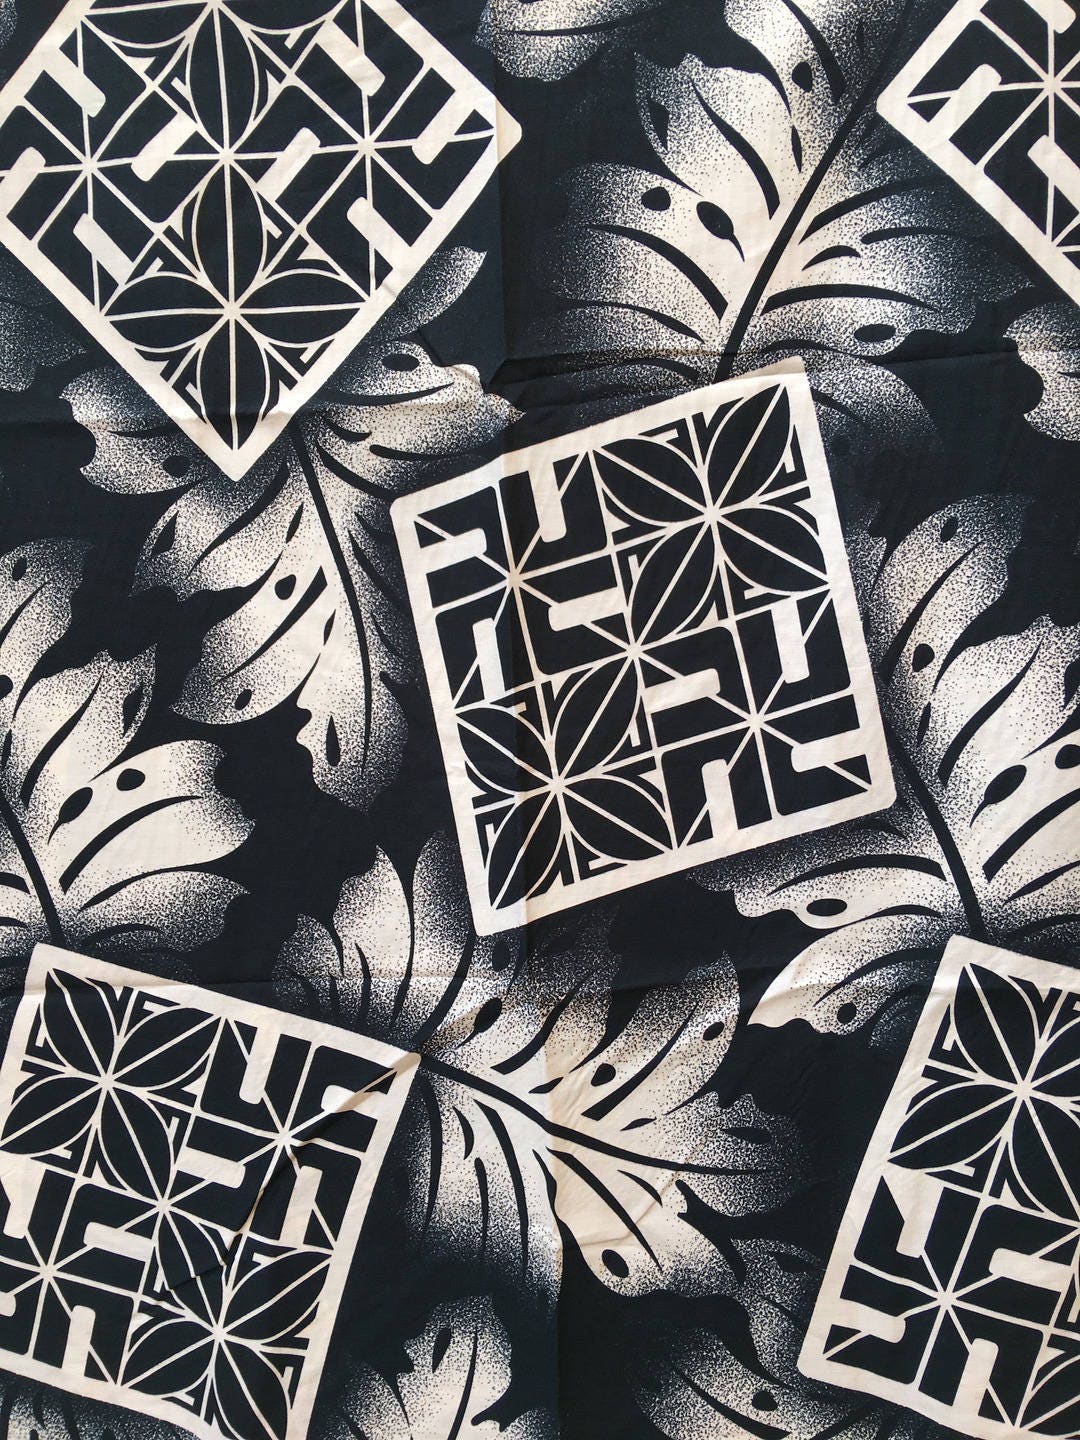 Tissu polyn sien Noir et blanc  motifs  de Maori et